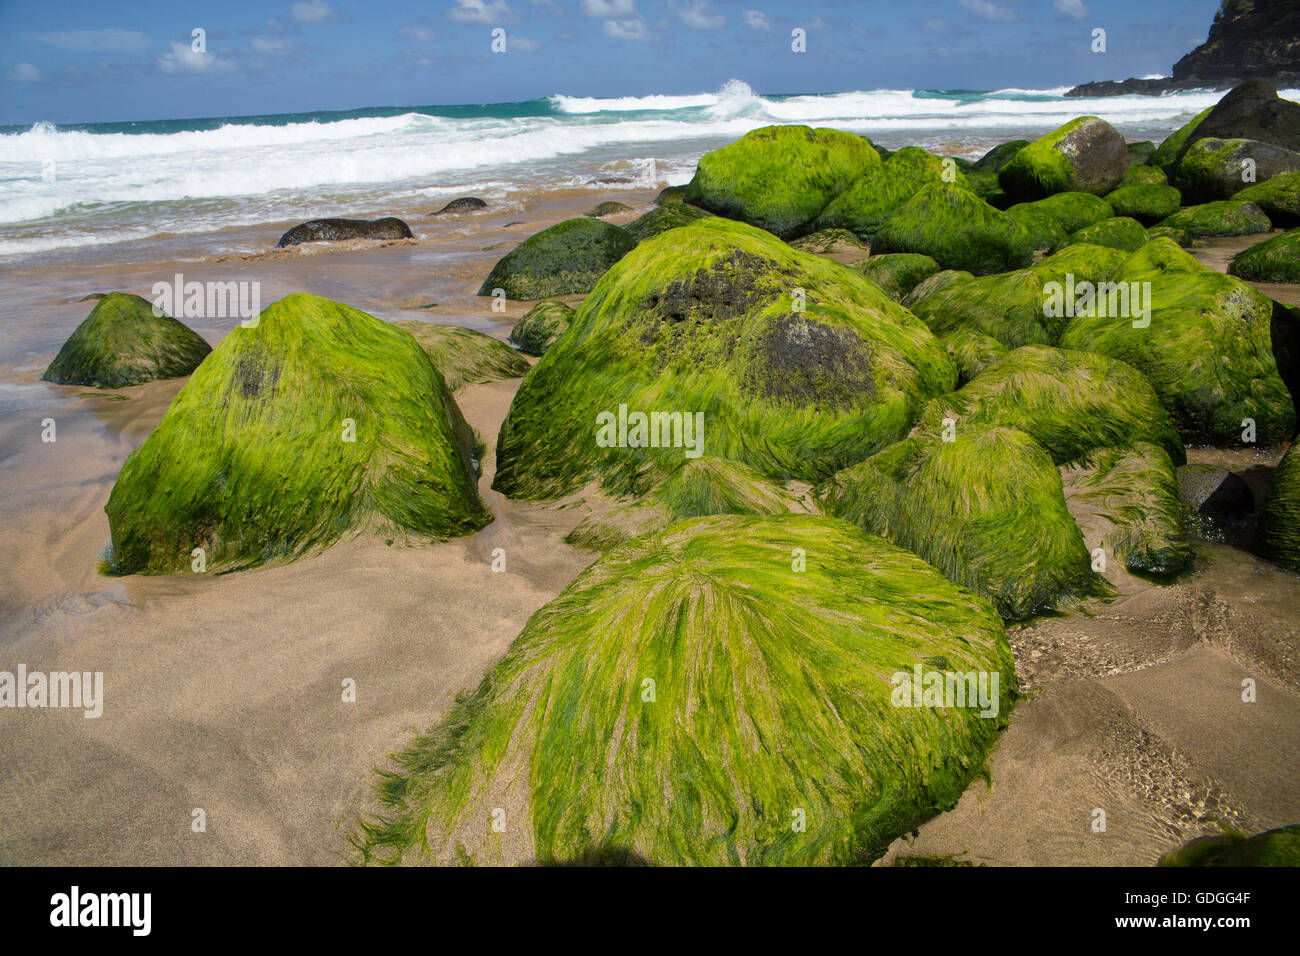 Kauai Beach,bien,Hanakapiai Pali,Mar,Costa,algas,piedras,de Kauai, Hawaii, EEUU,América, Foto de stock